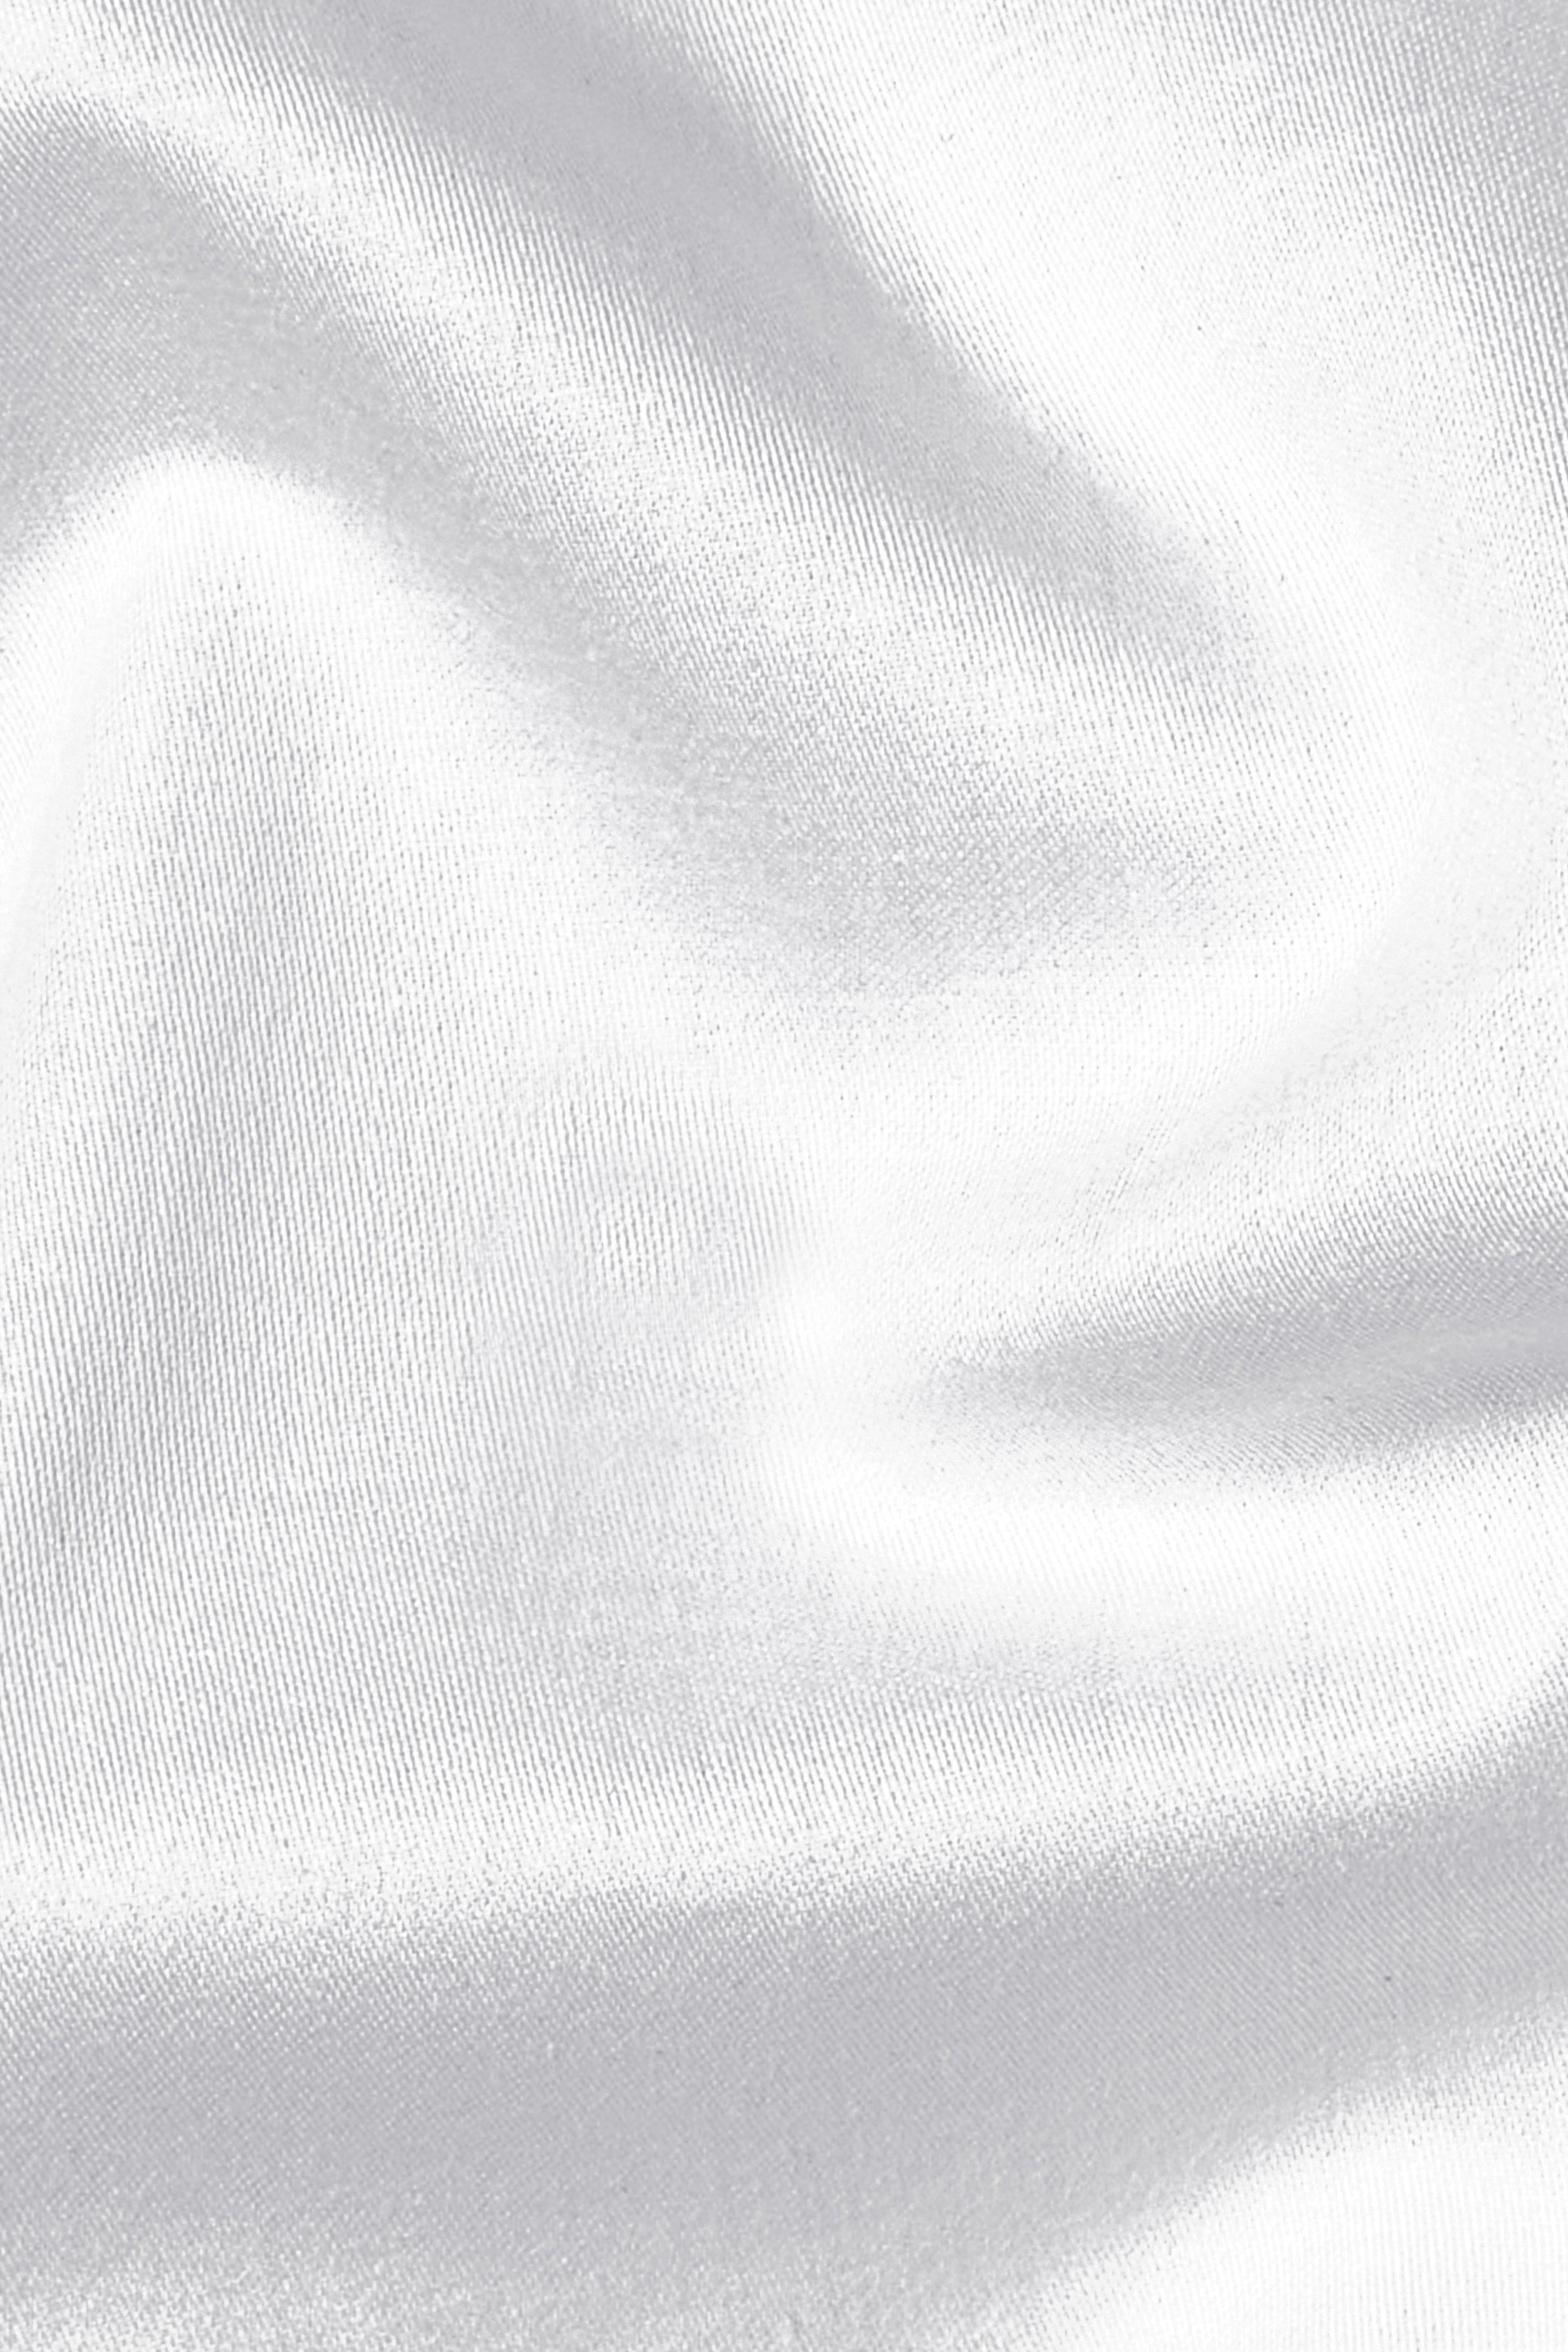 Bright White Subtle Sheen Rice Stitching Patterned Designer Super Soft Giza Cotton SHIRT